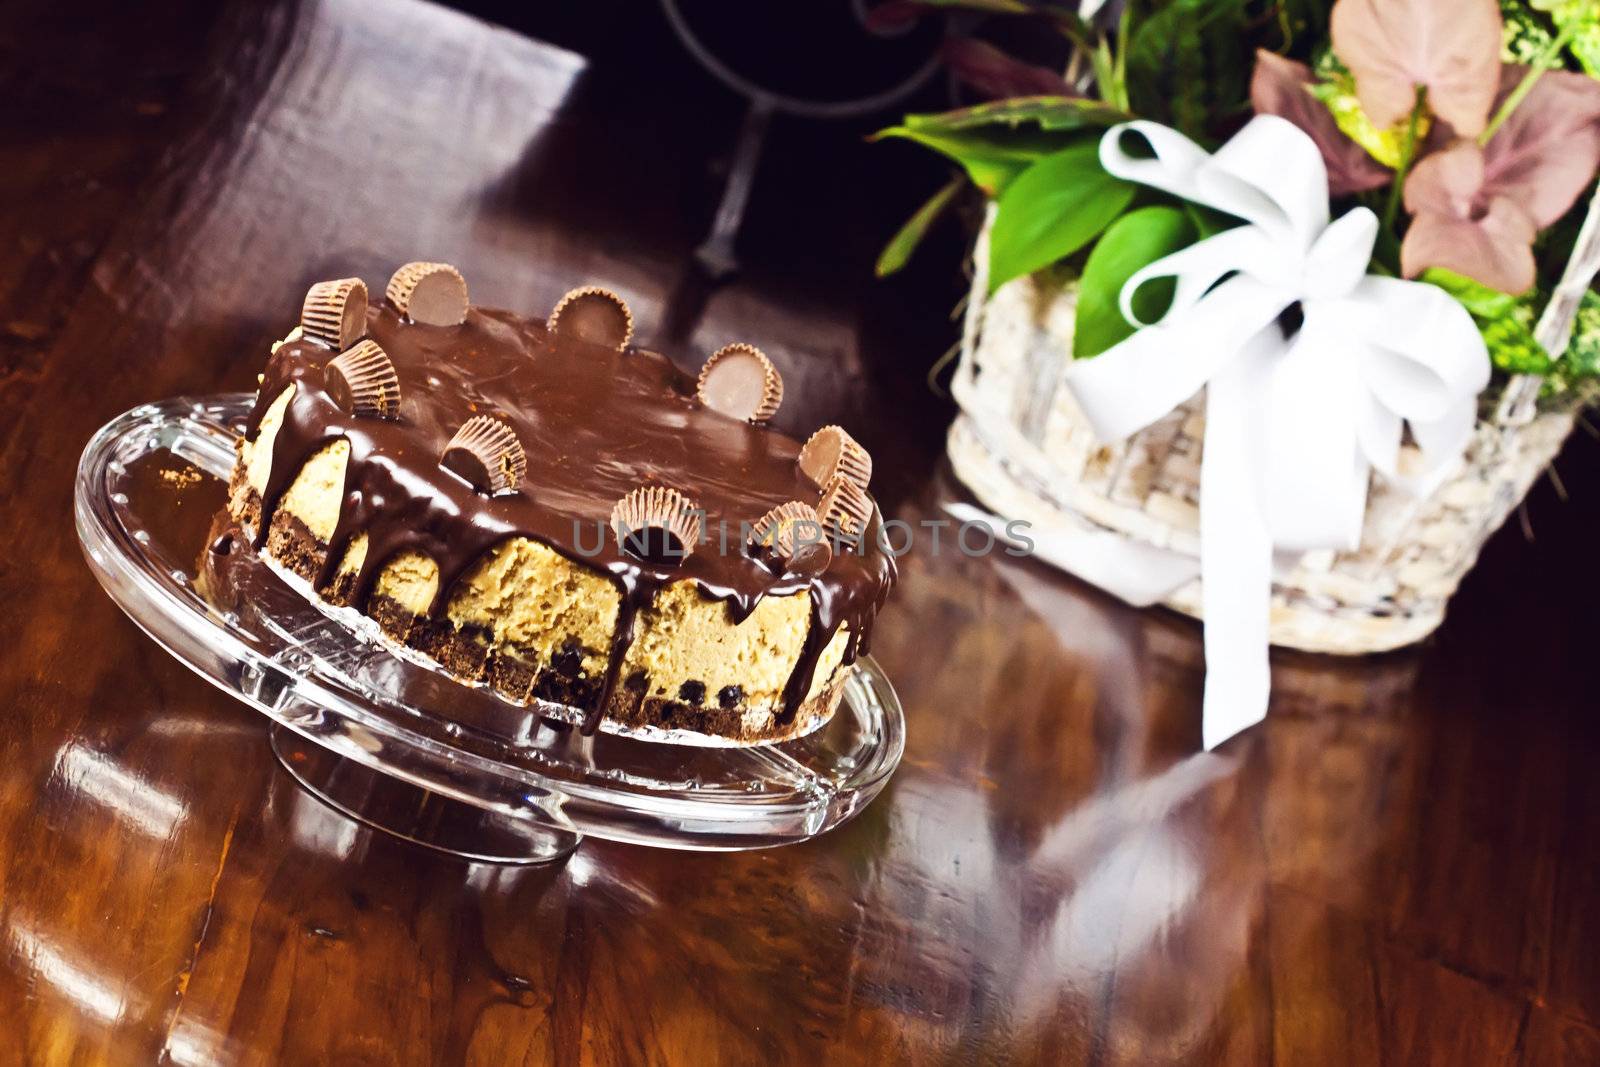 Chocolate cheesecake by oneinamillion